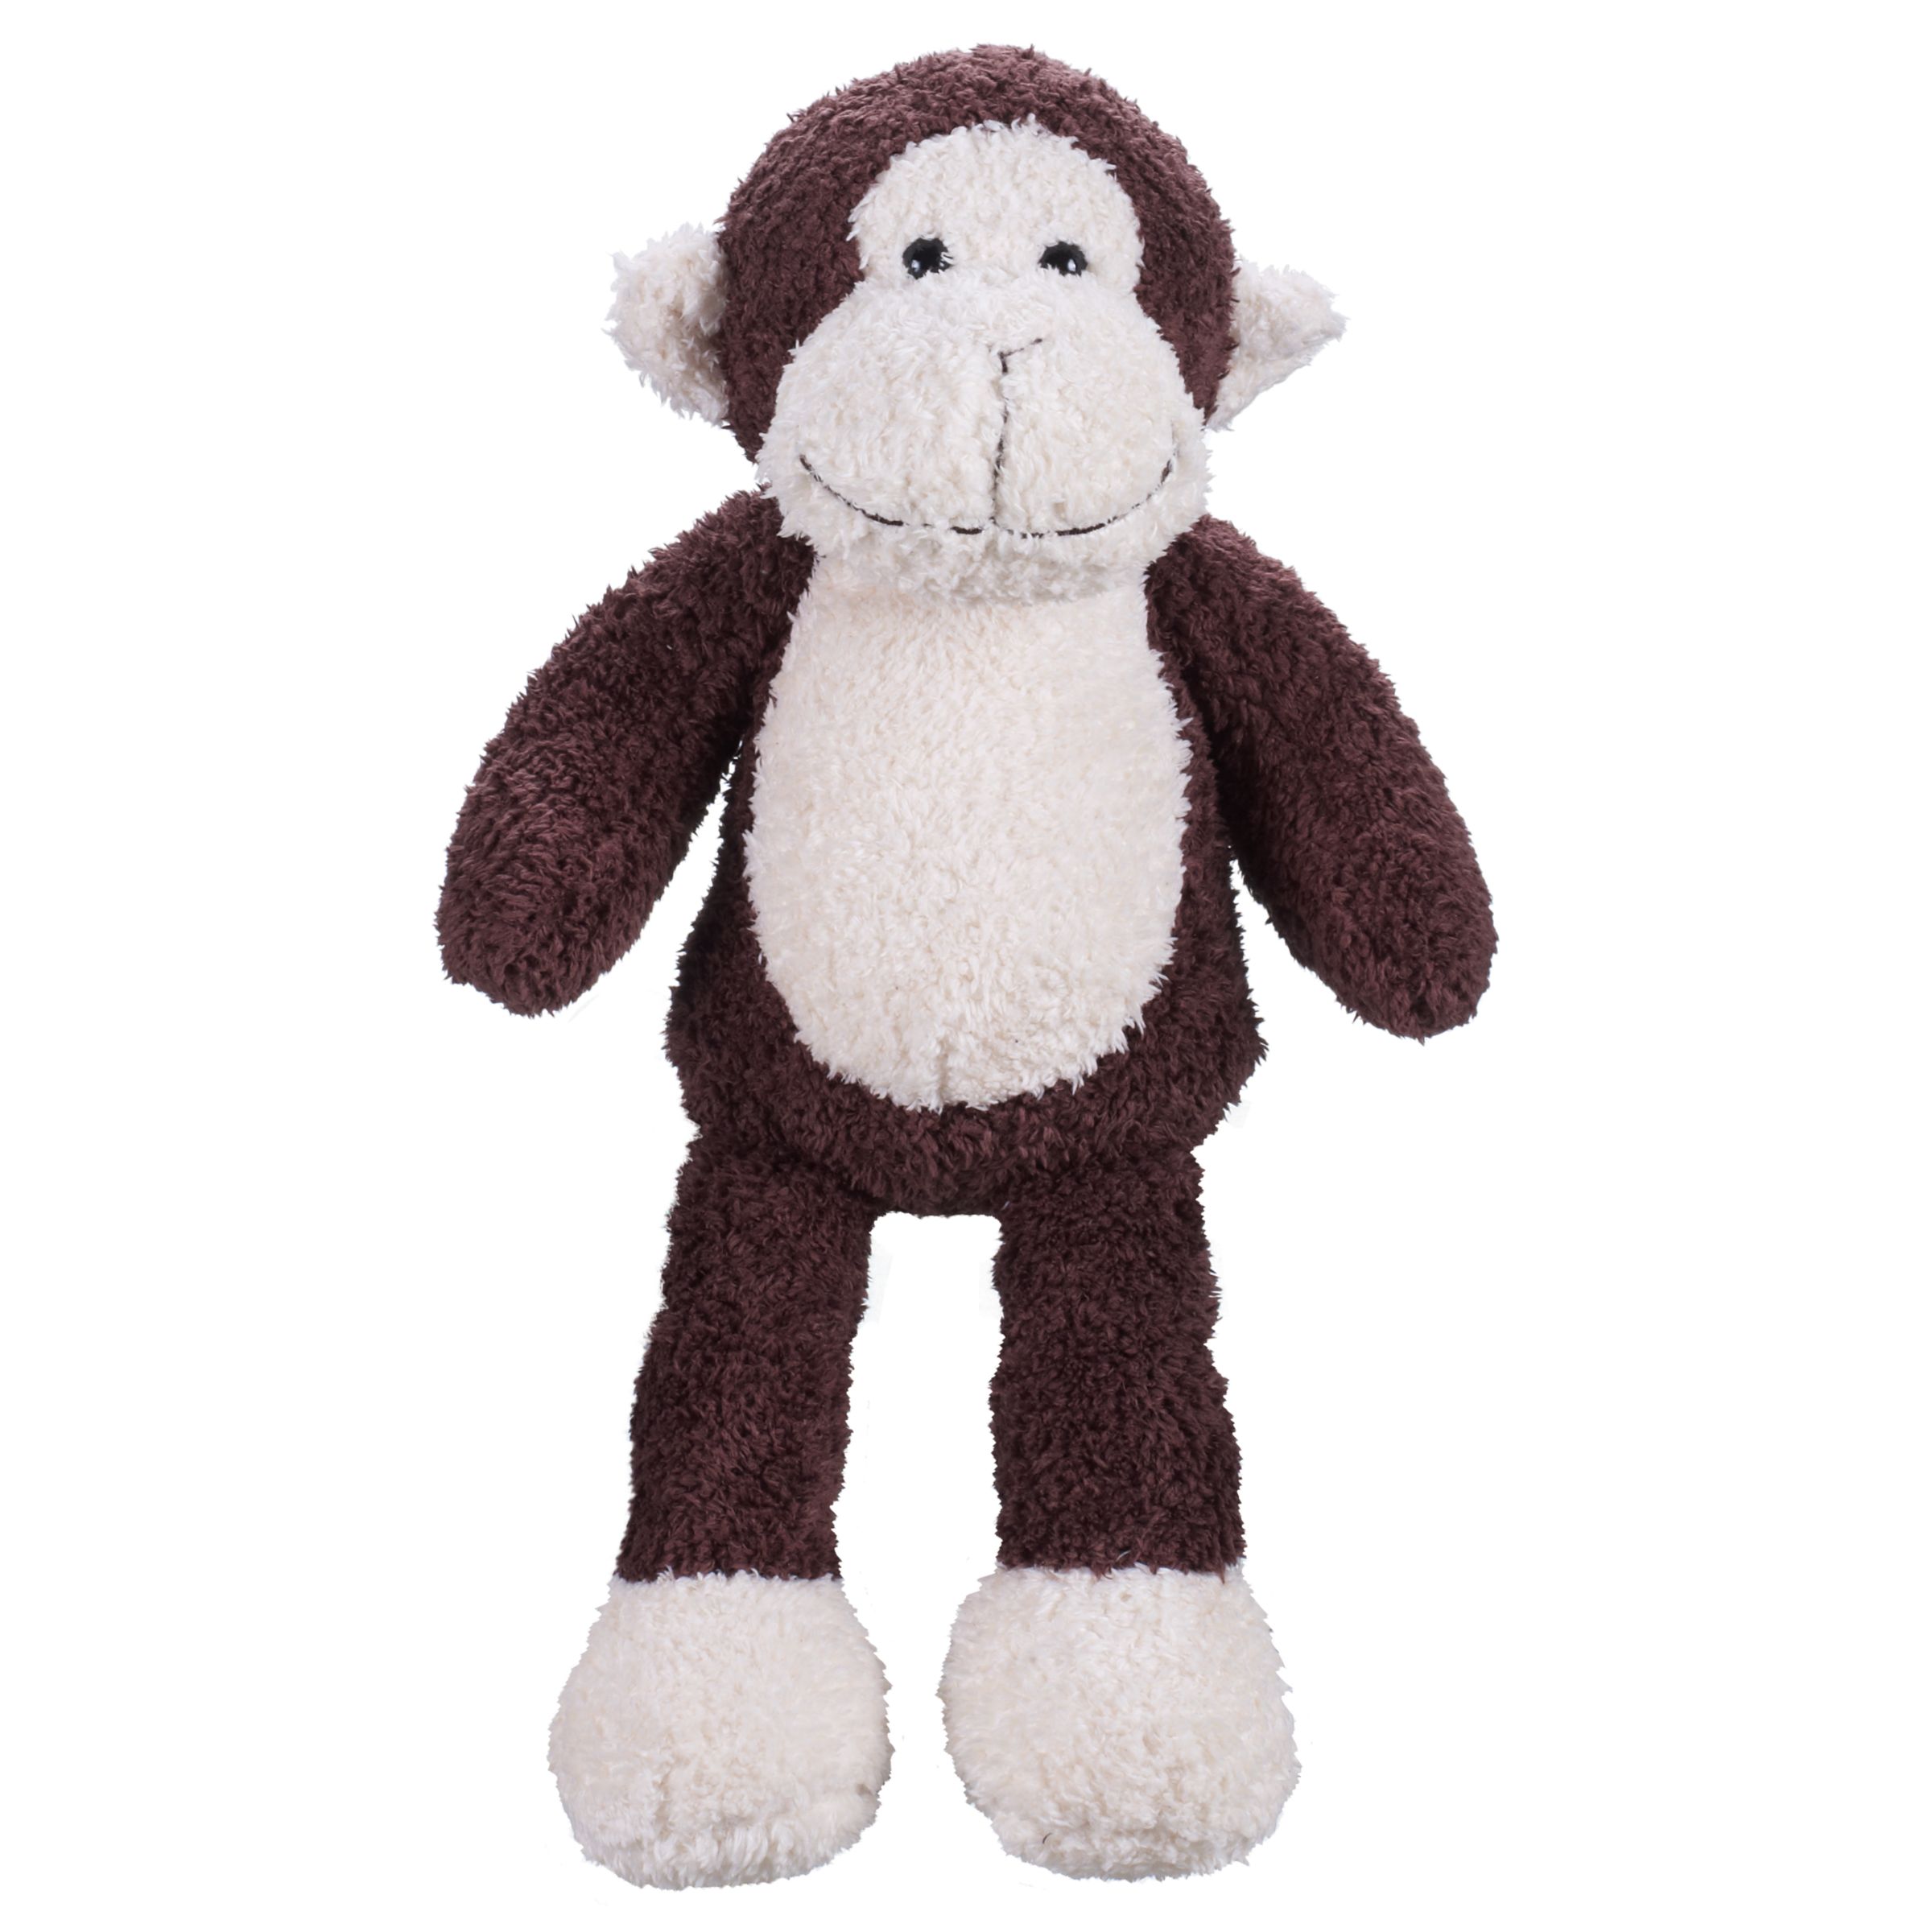 John Lewis Michael the Monkey Soft Toy